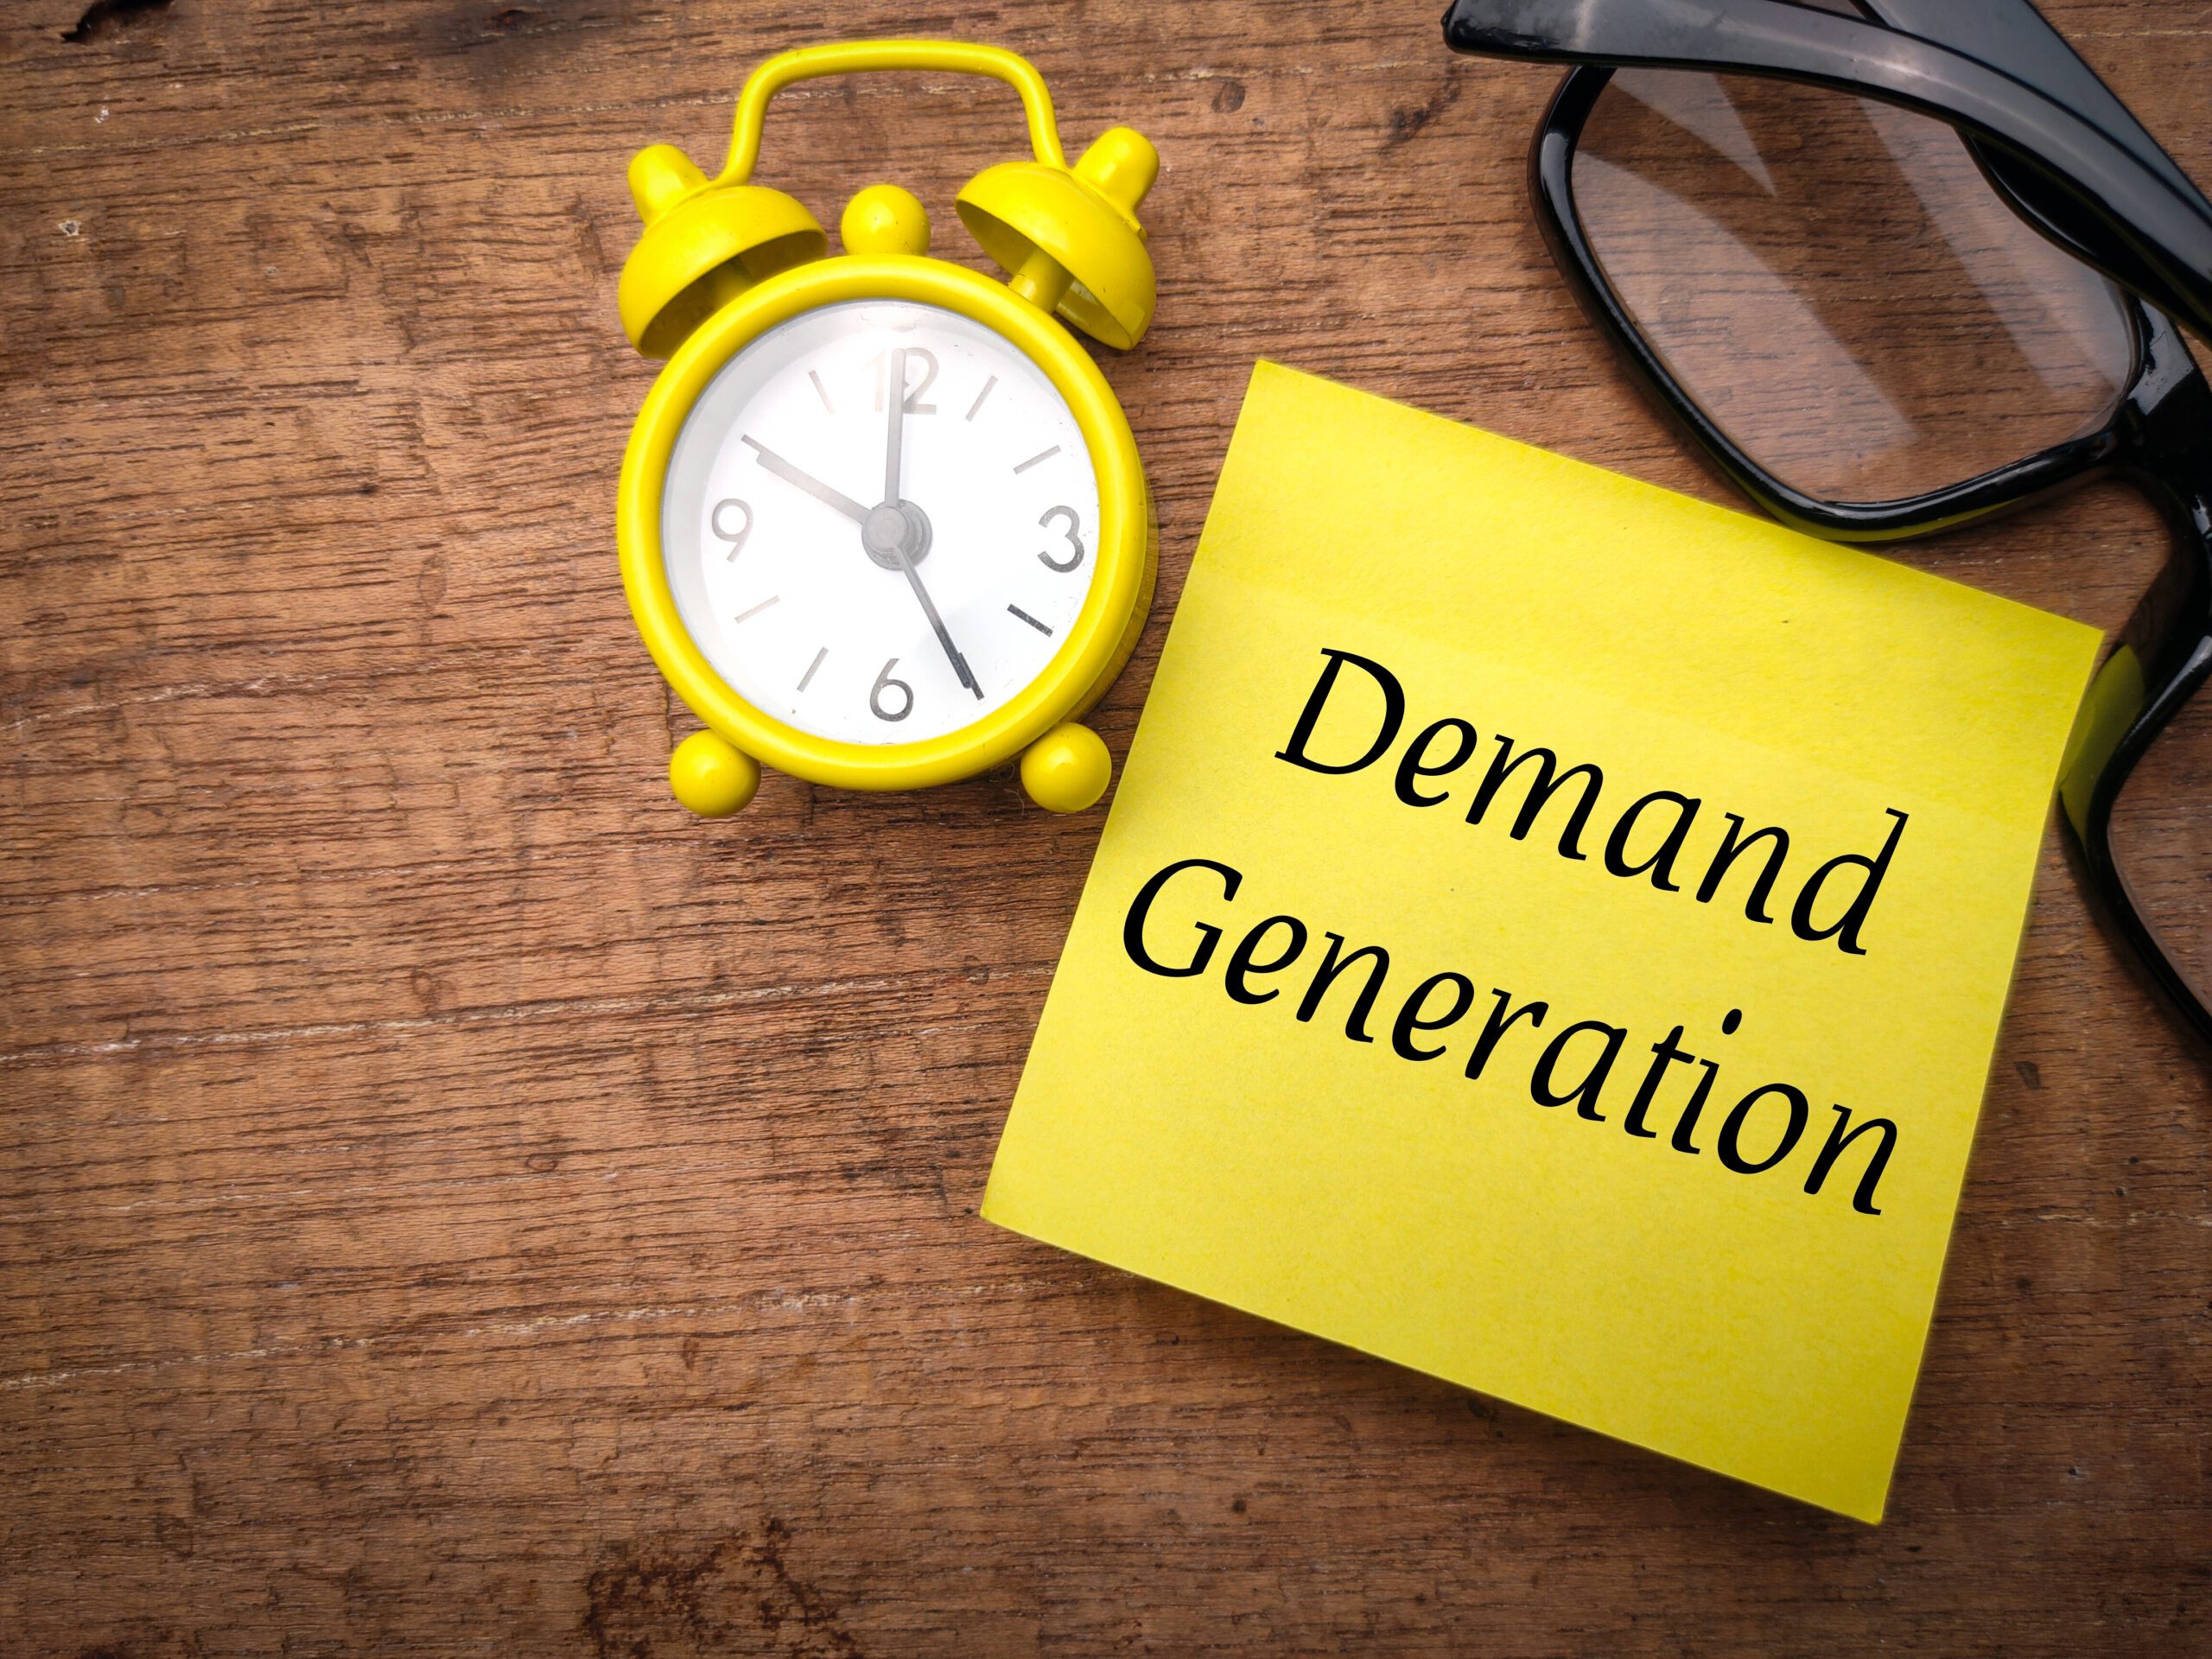 demand generation